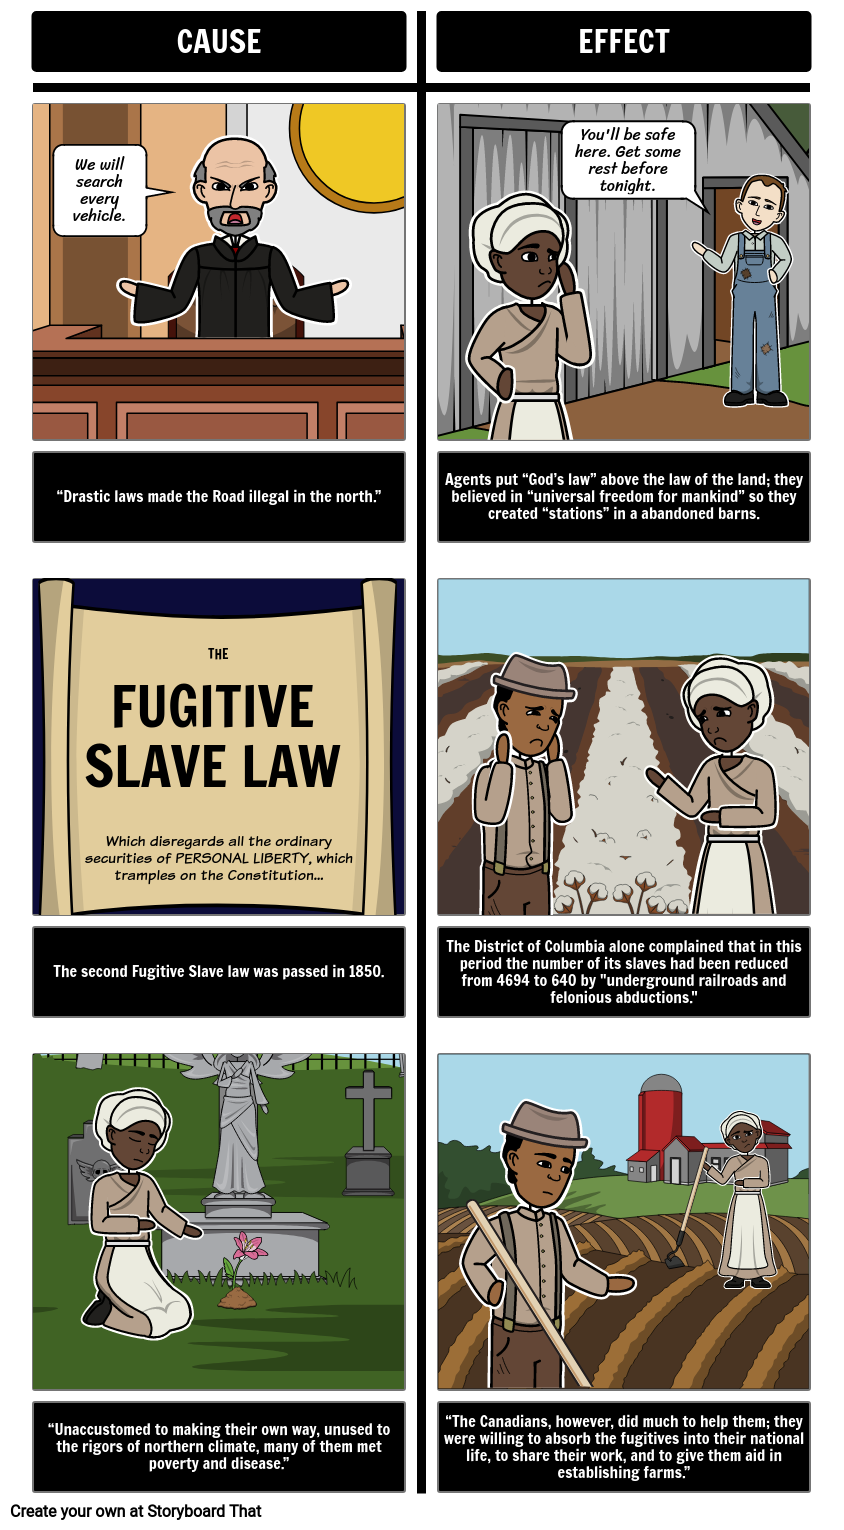 fugitive slave act cartoon